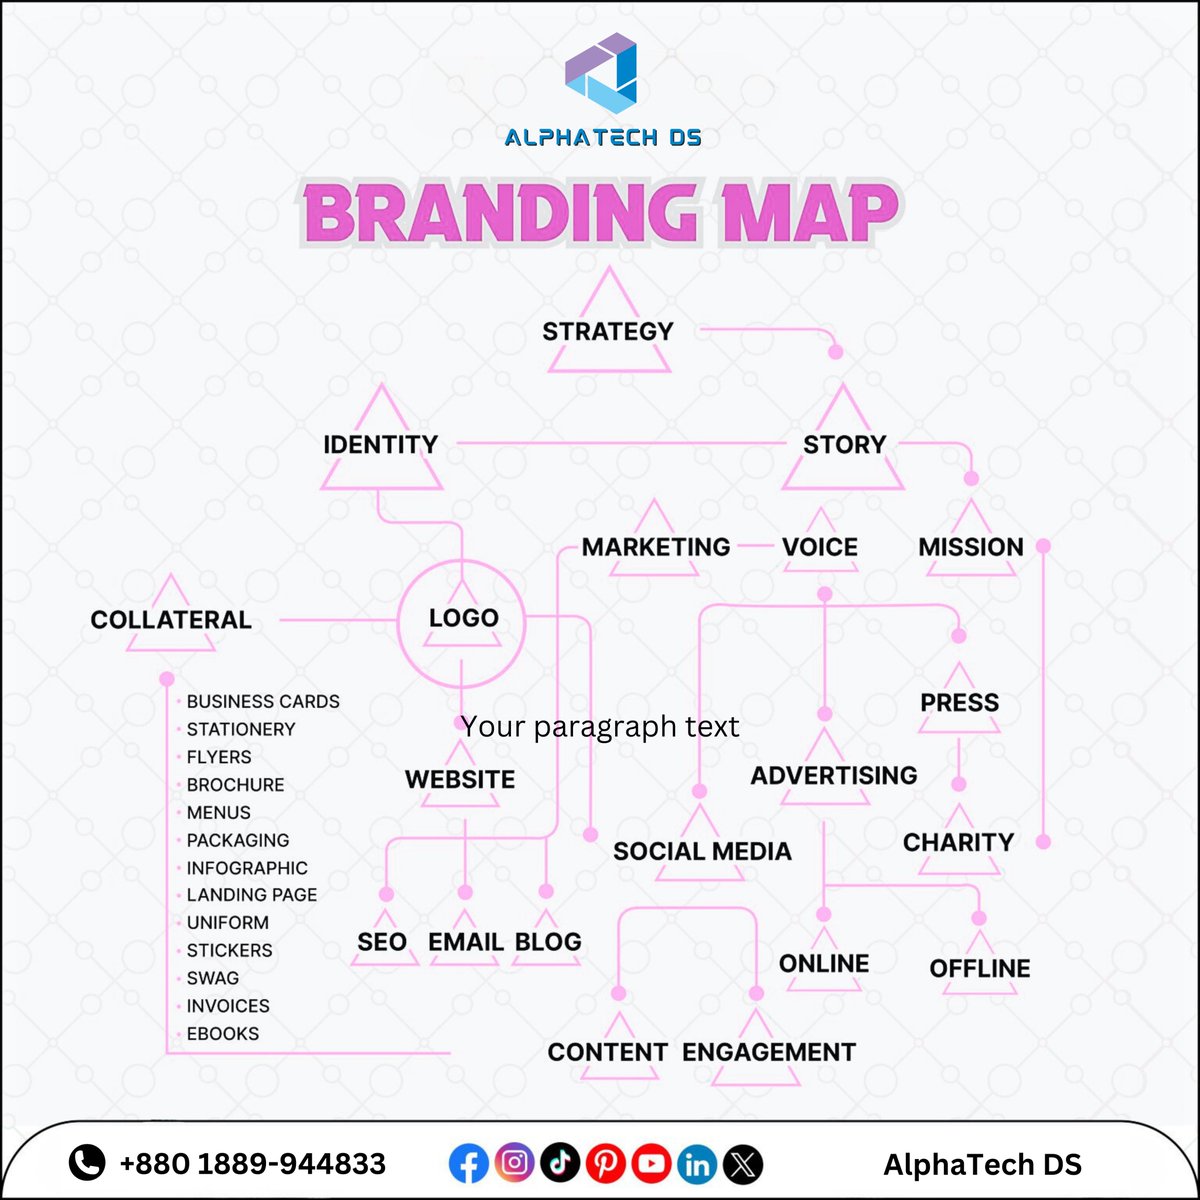 #BrandingStrategy #BrandIdentity #VisualIdentity #BrandMessaging #TargetAudience #BrandPositioning #CustomerExperience #BrandConsistency #brandsuccess #brandingmap #digitalmarketingagency #business #feed #explore #alphatechds